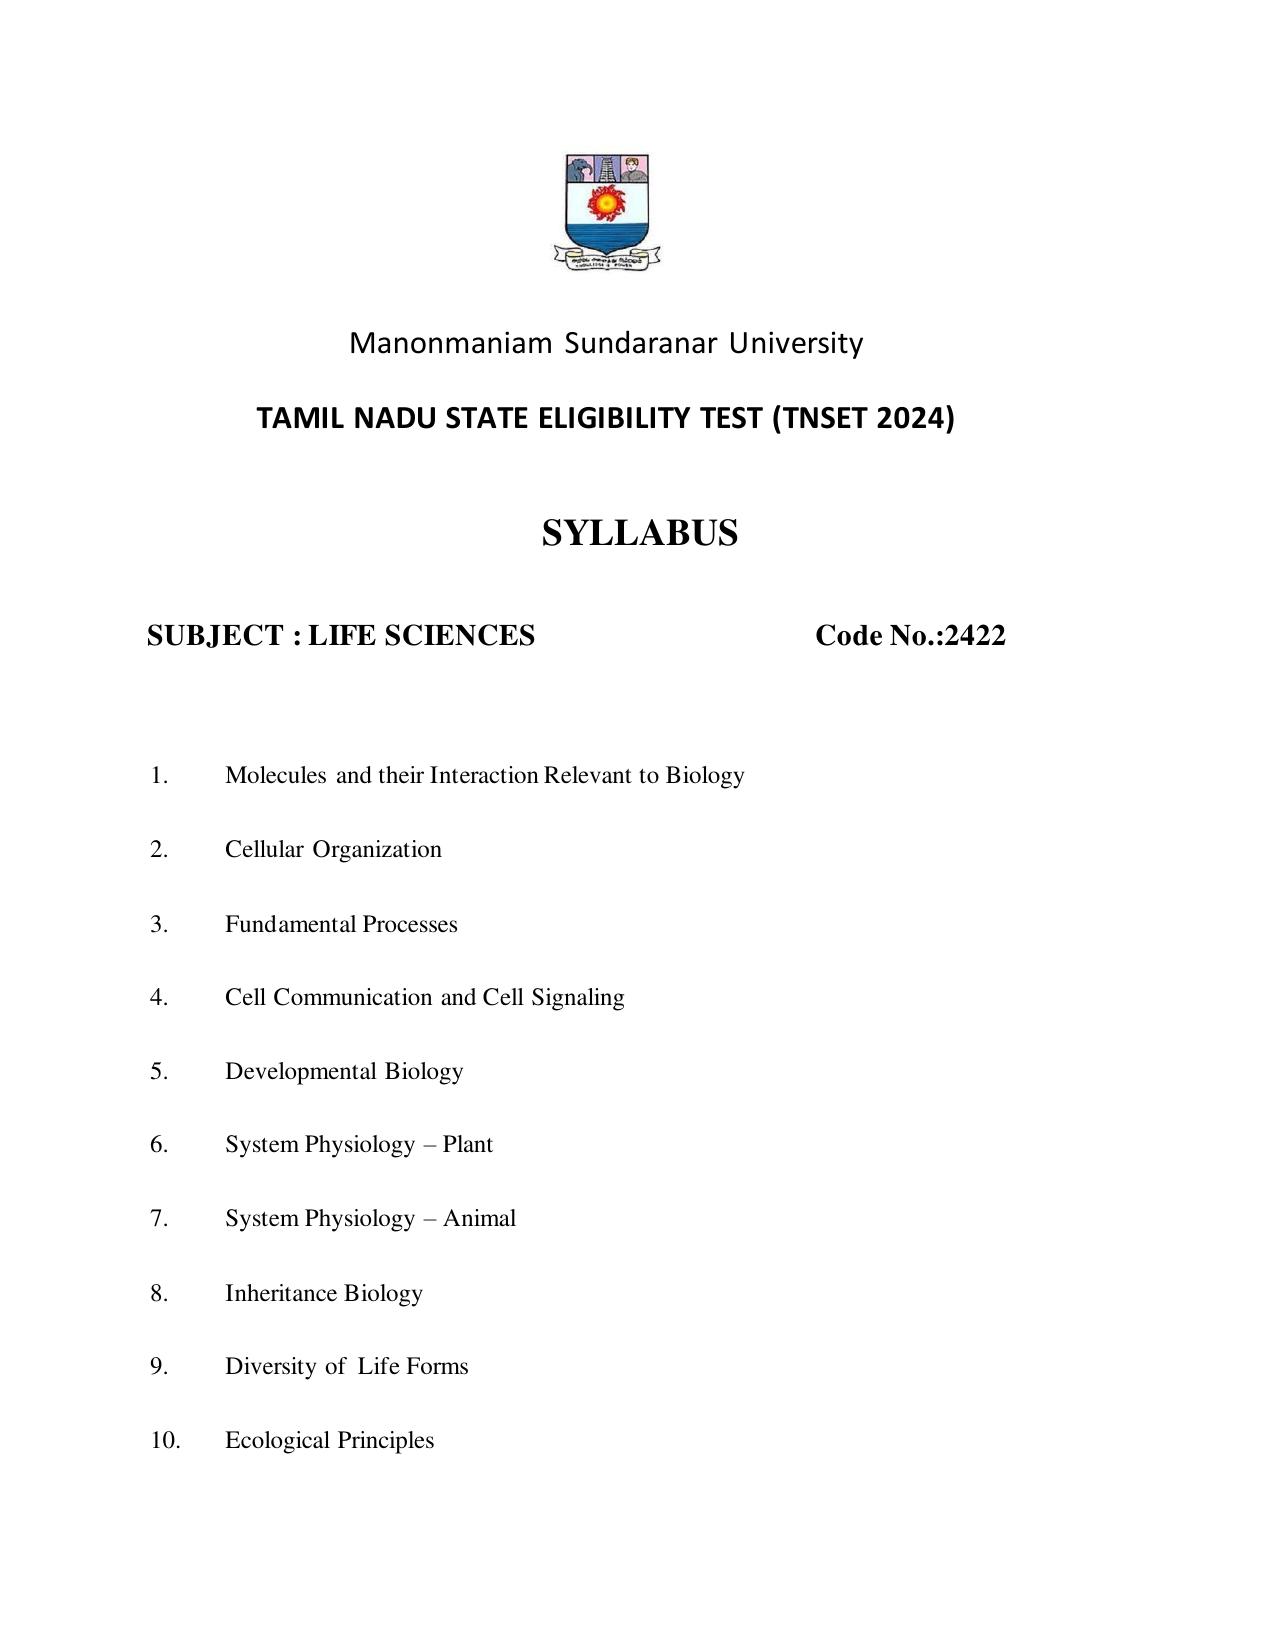 TNSET Syllabus - Life Sciences - Page 1